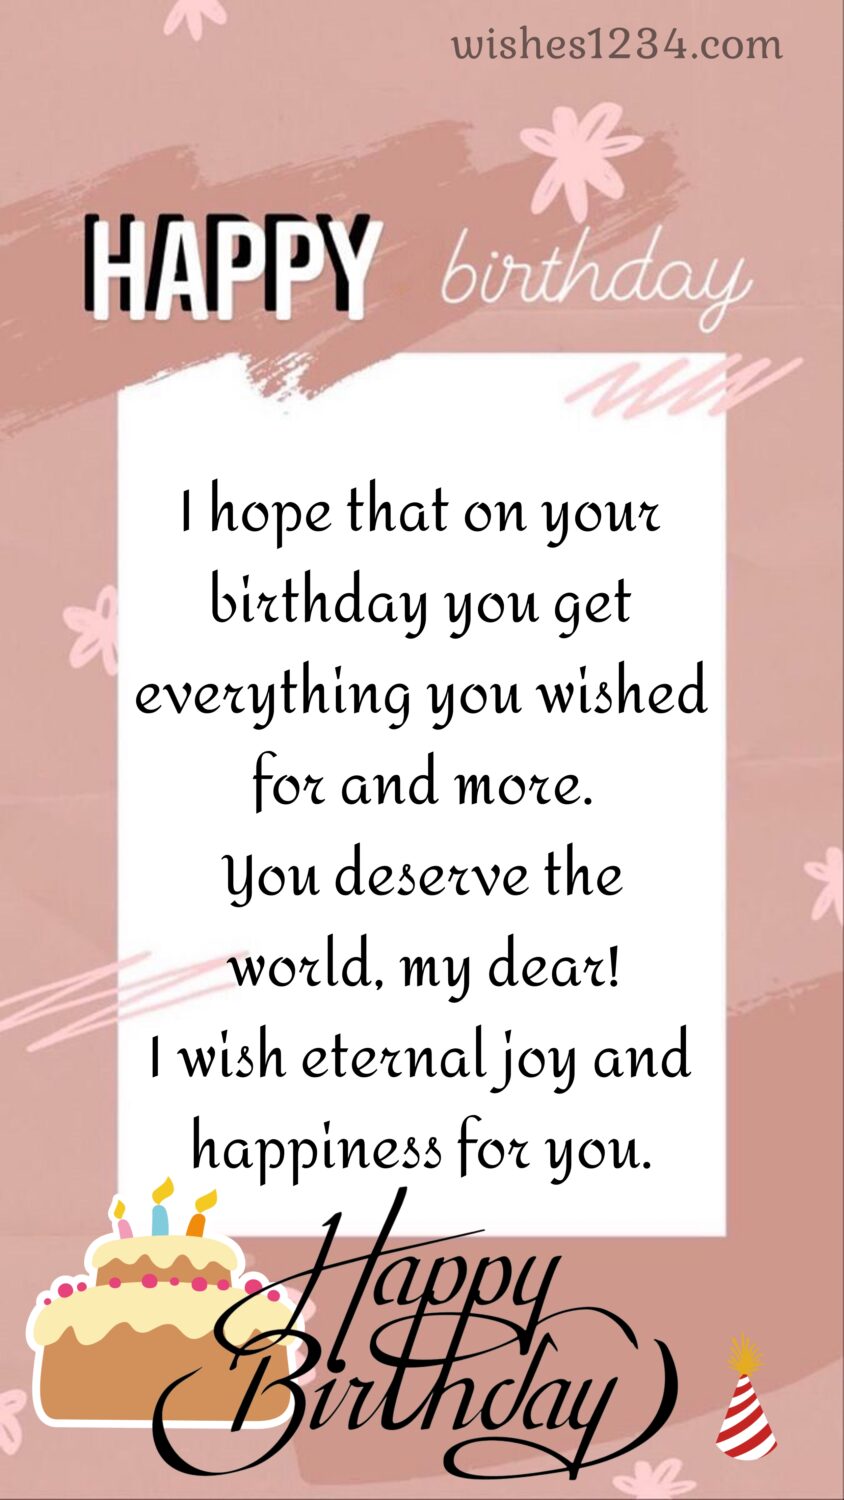 Pink background birthday text, Happy Birthday wishes.